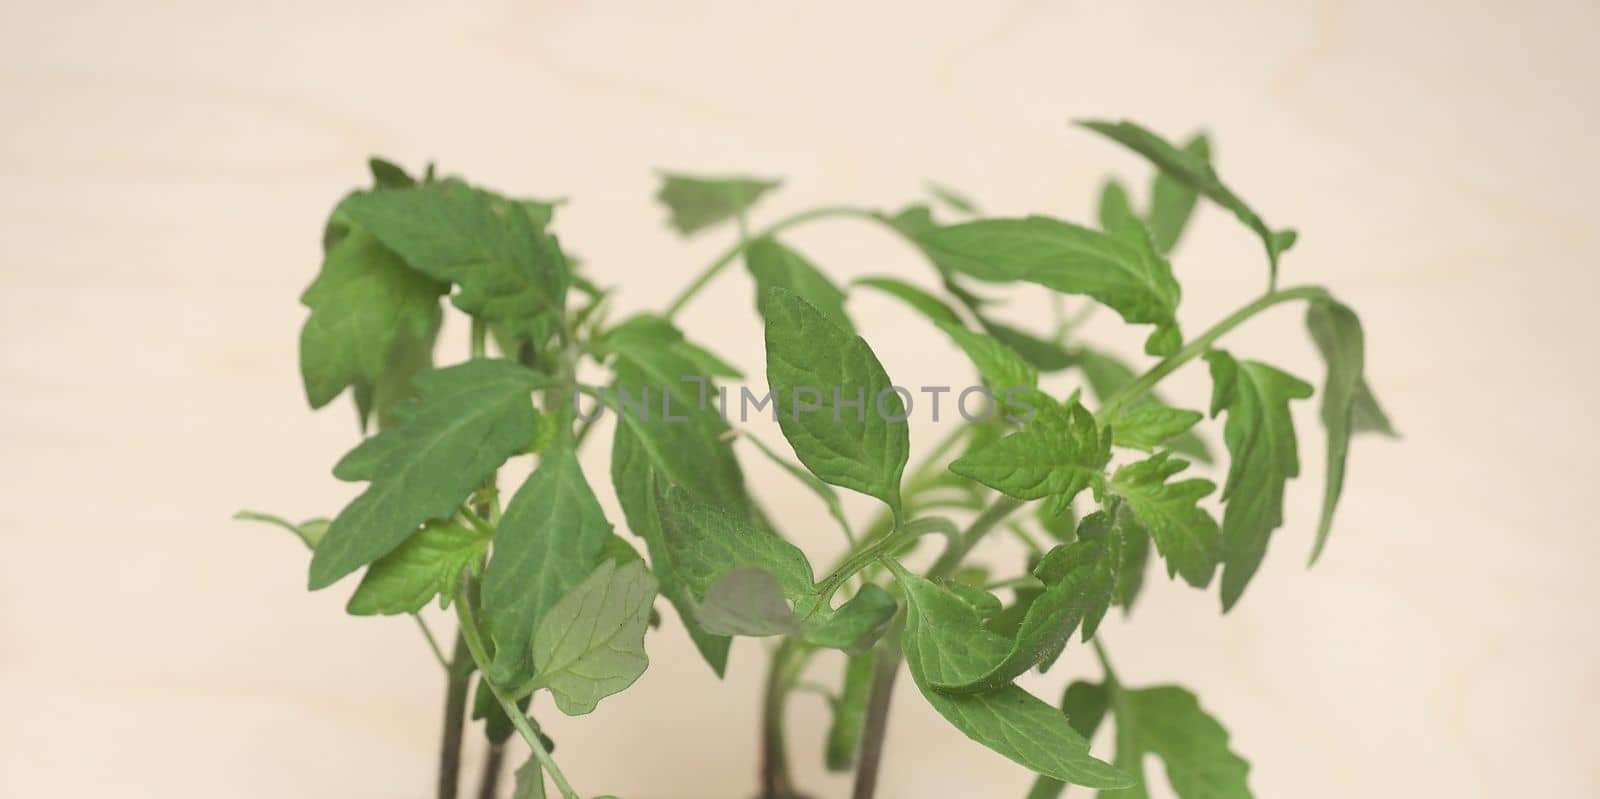 tomato plants (Solanum lycopersicum) seedlings in plastic pots